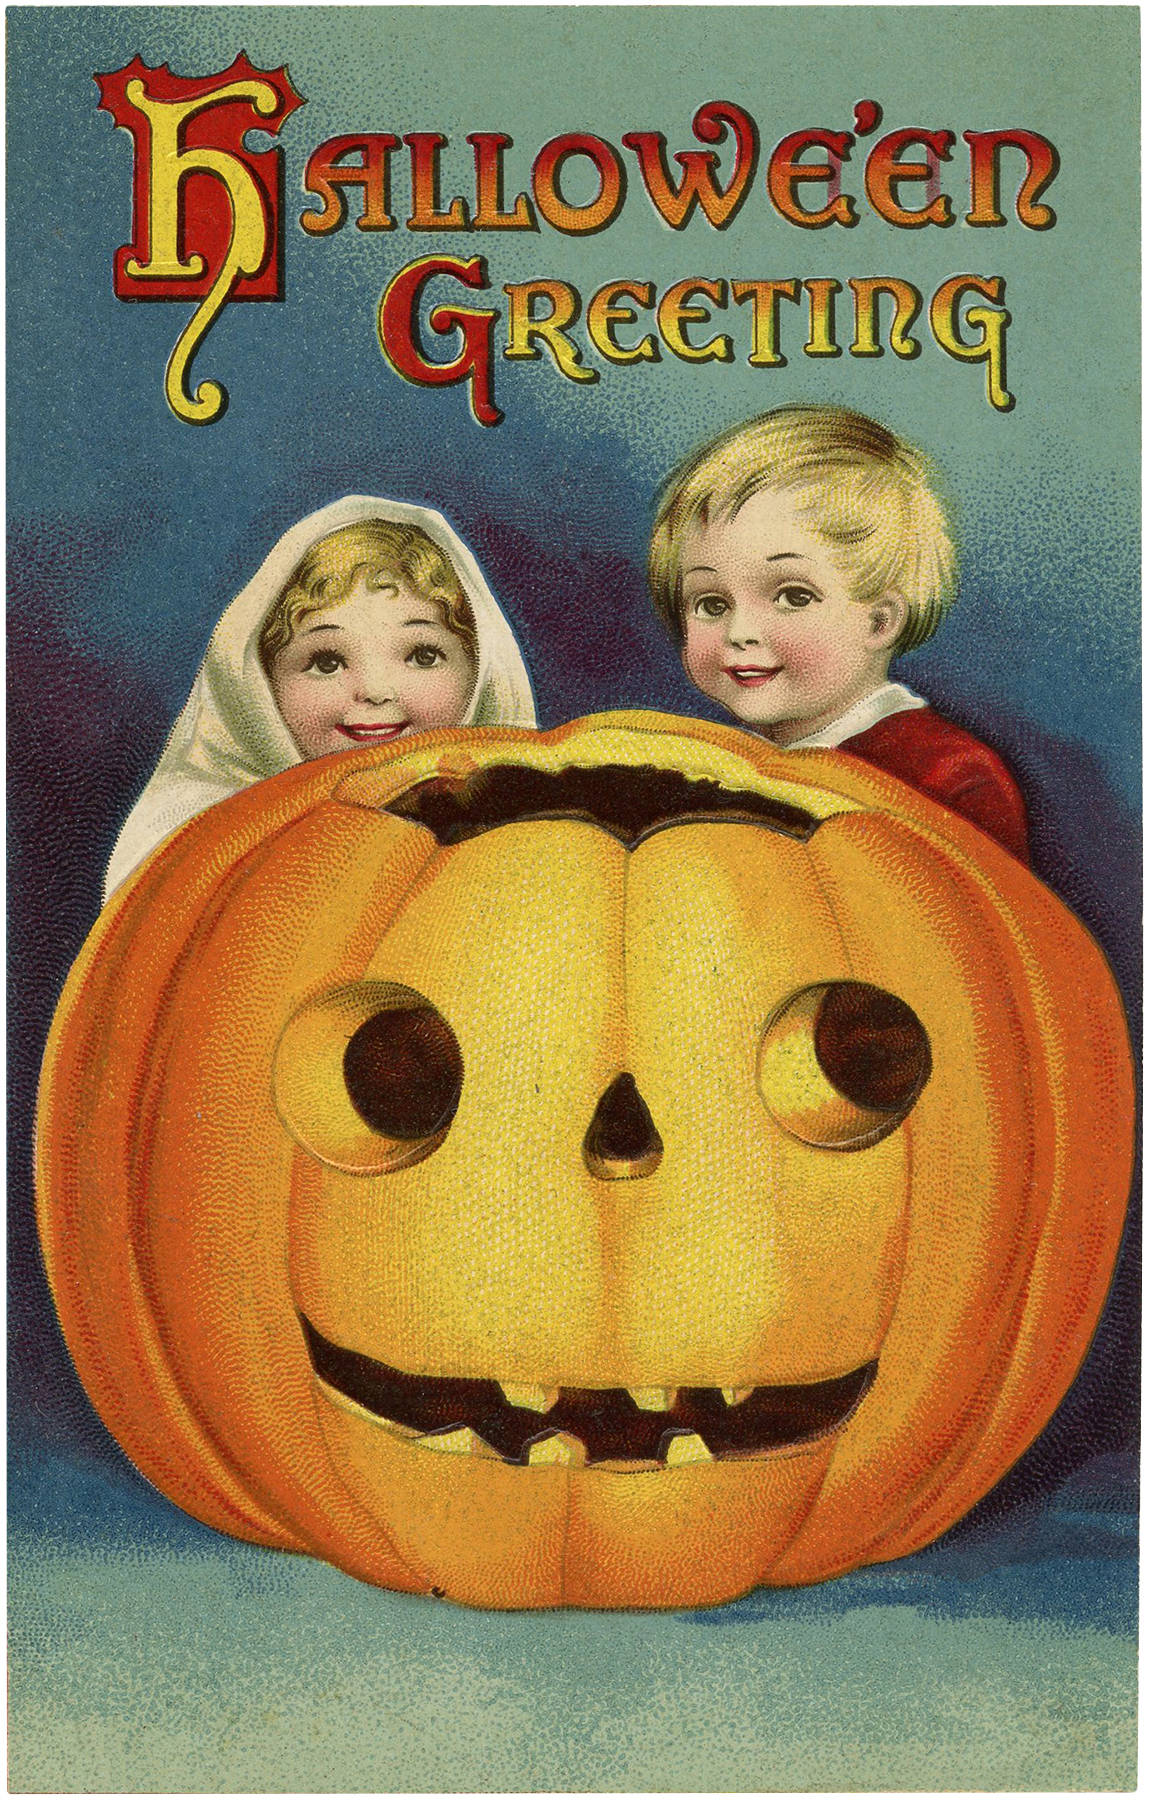 Adorable Vintage Halloween Pumpkin Kids Image! - The ...